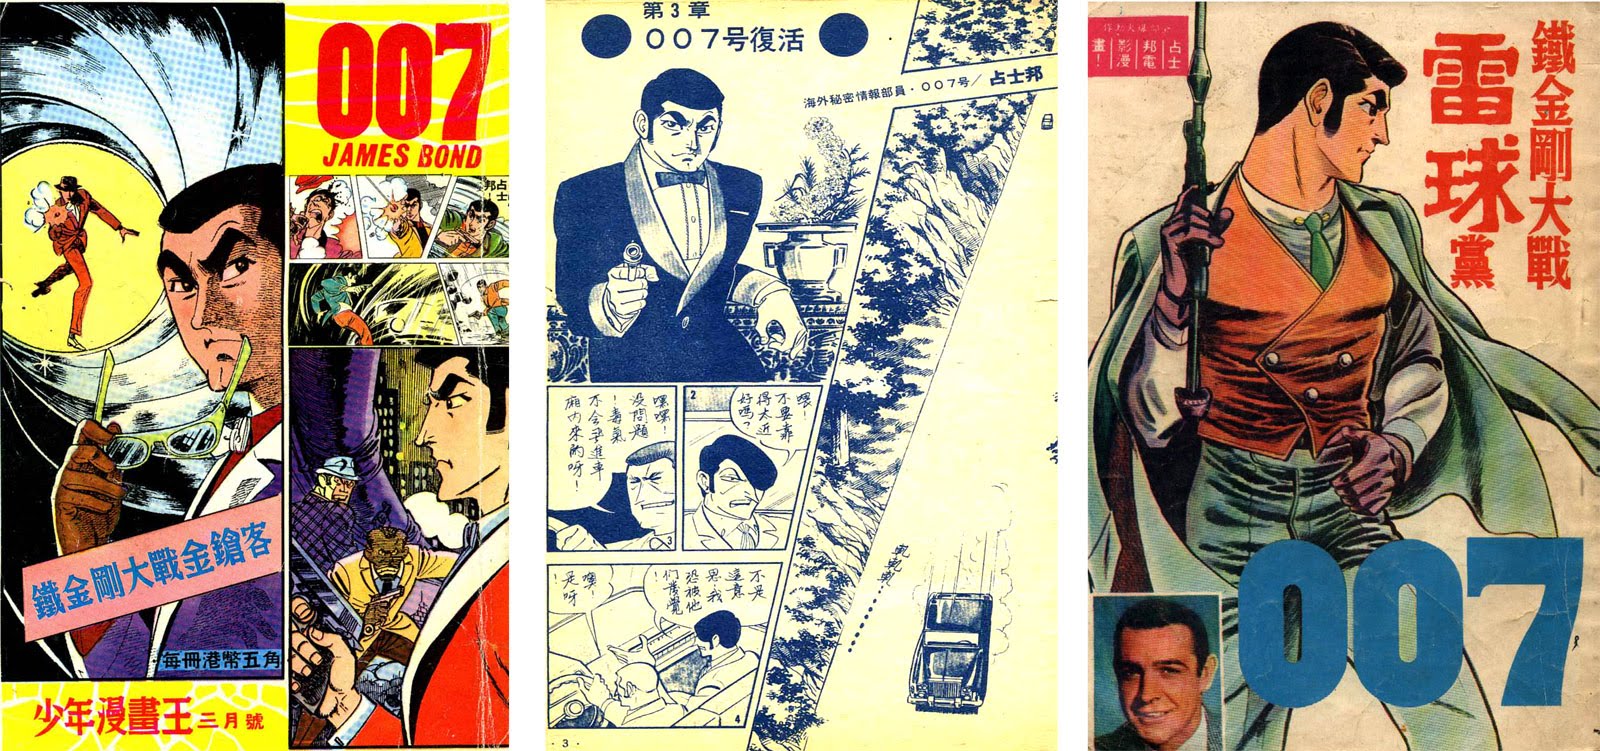 James+Bond+007+Hong+Kong+comic+pages.jpg